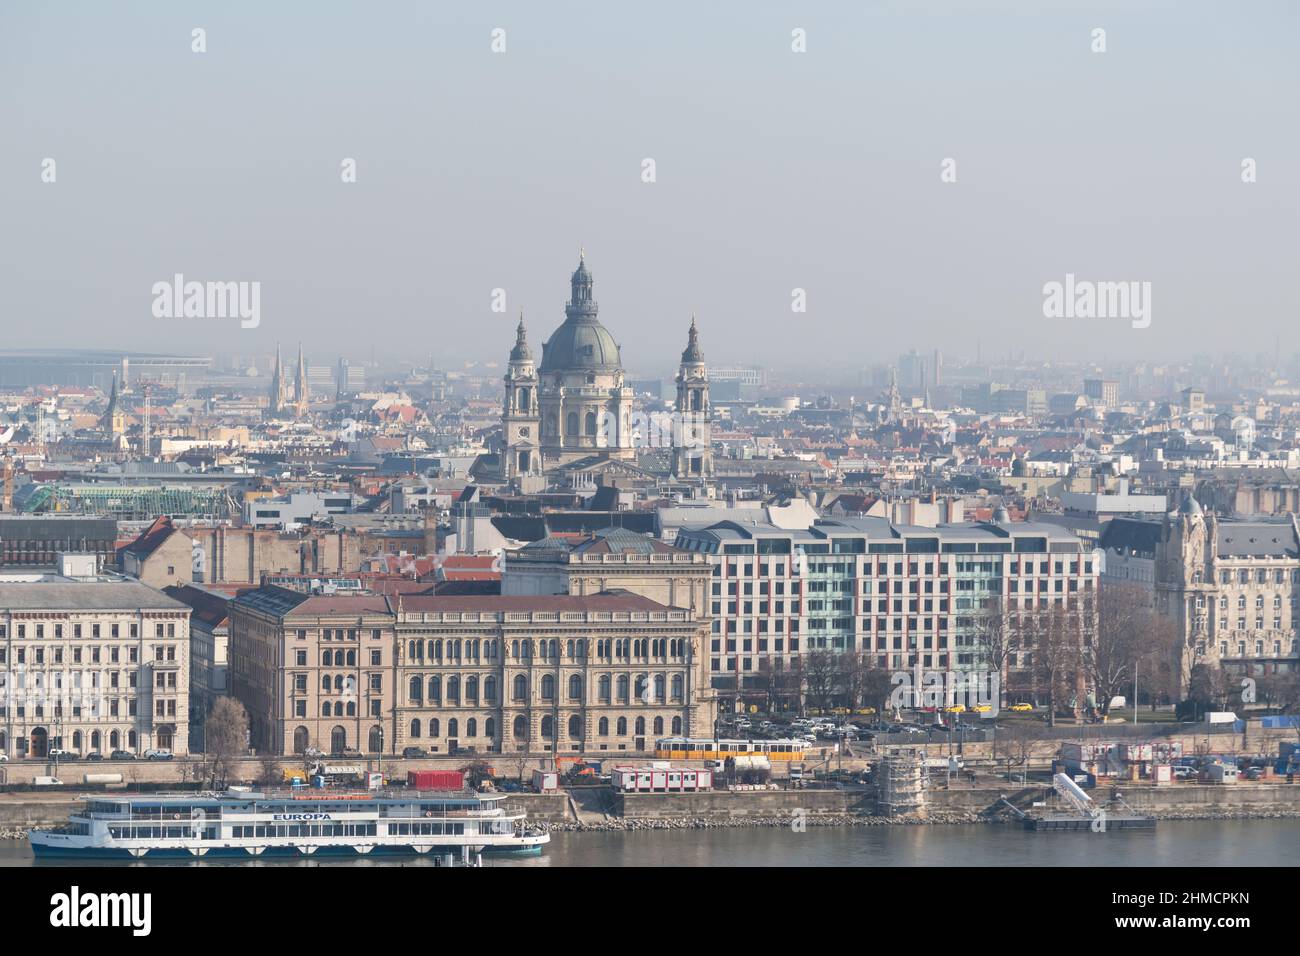 Saint Stephen's Basilica on Pest Danube river bank in Budapest, Hungary Stock Photo